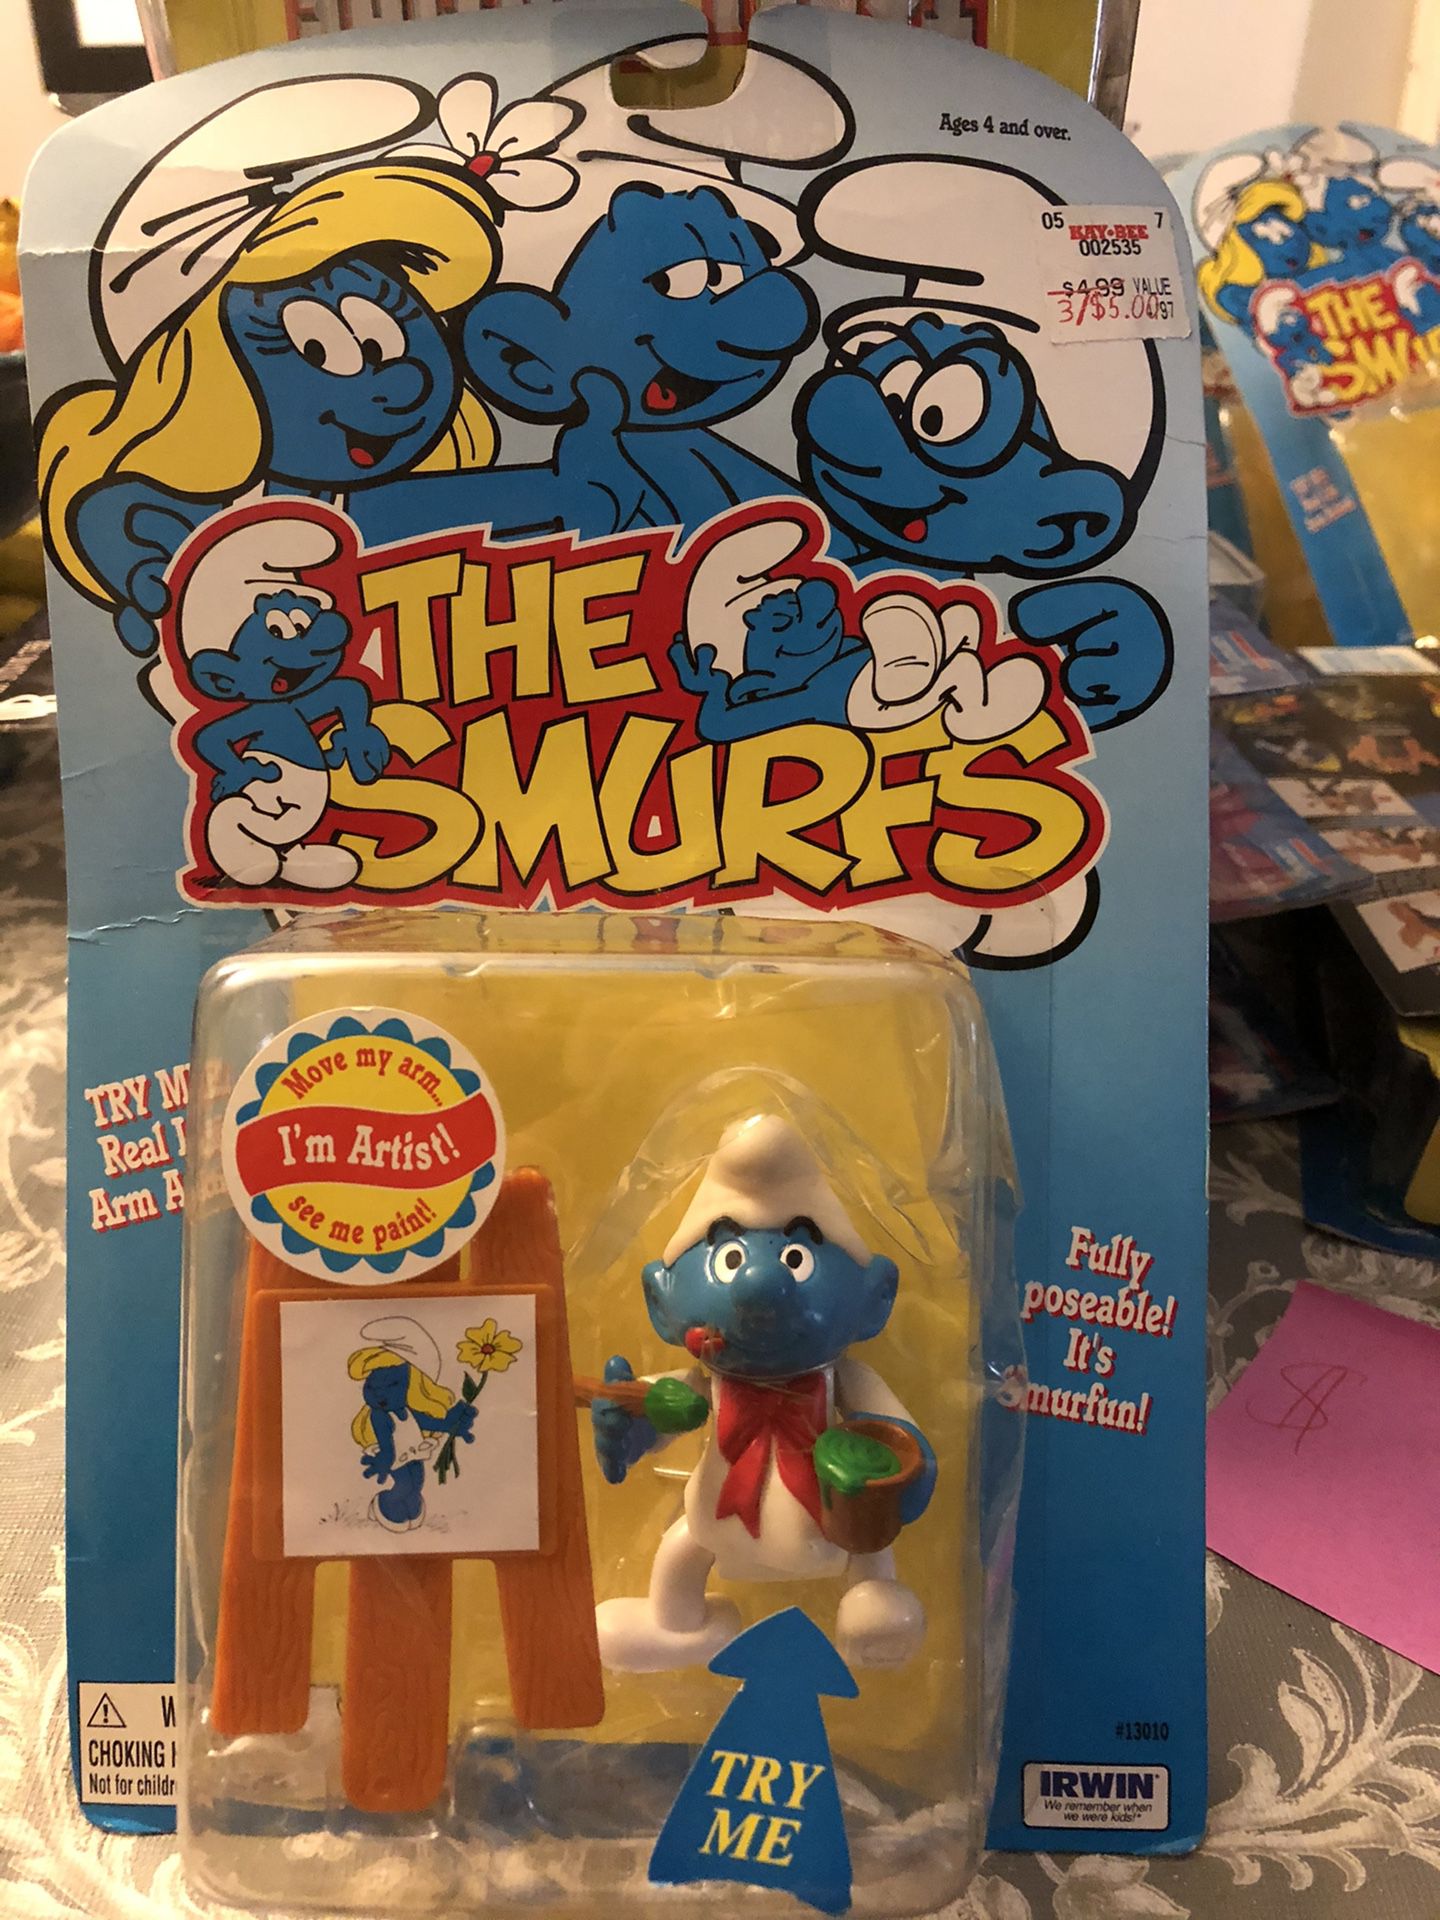 The smurfs Artist smurf action figure